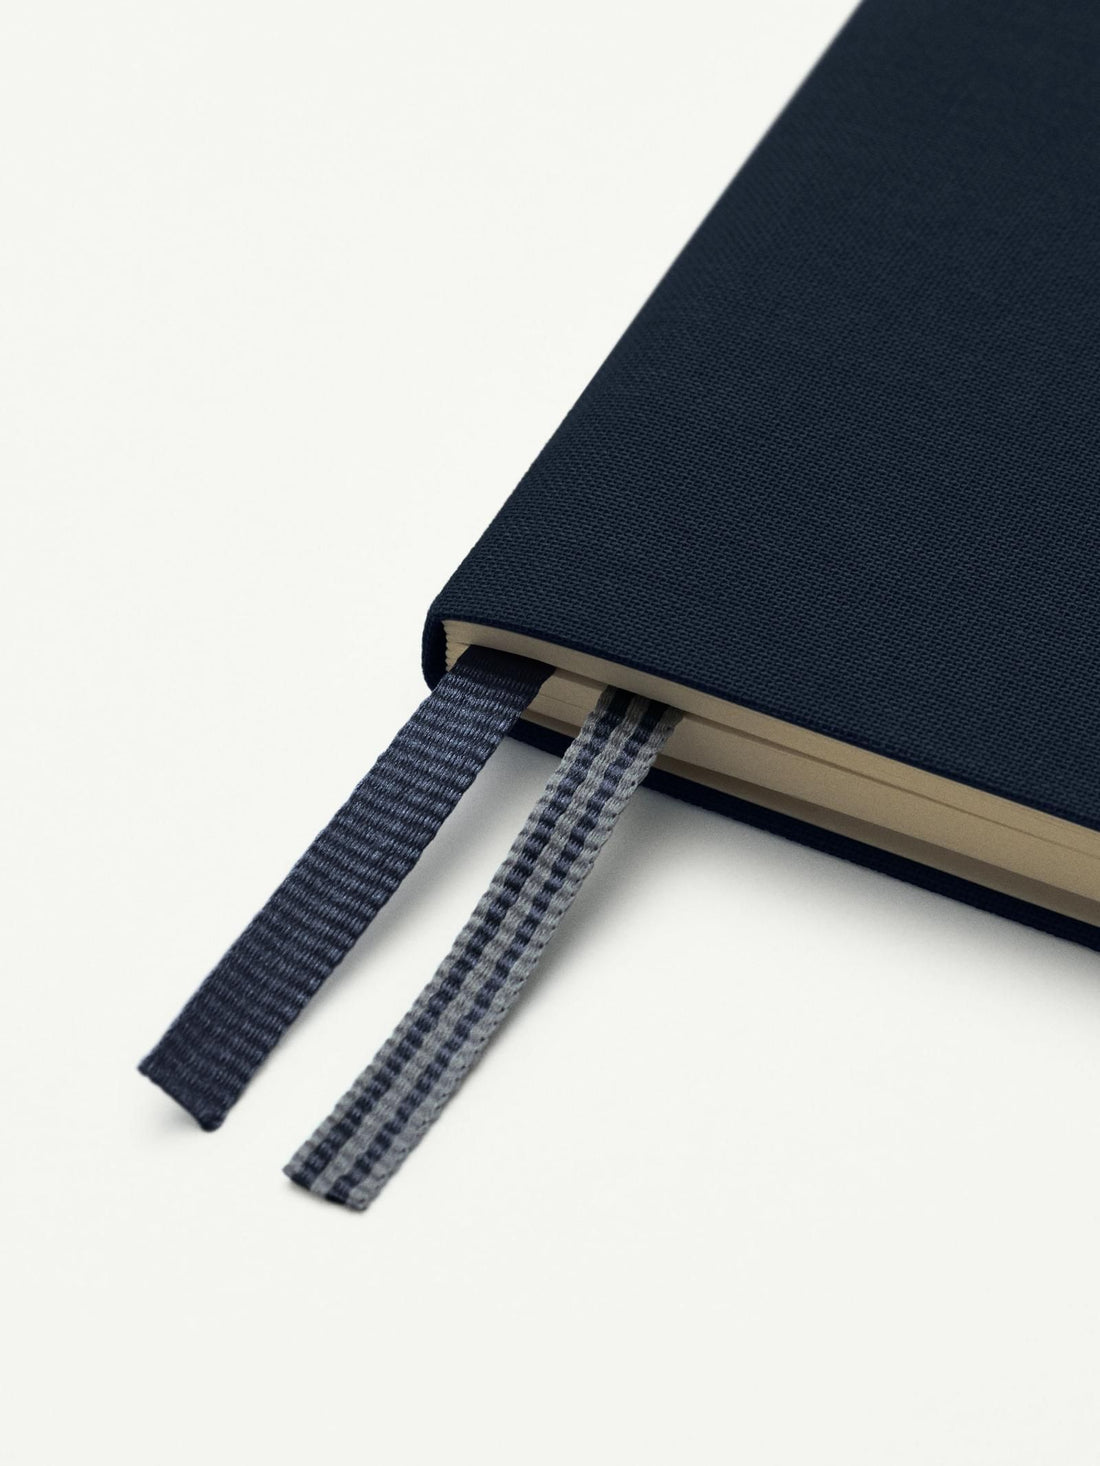 Monocle Hardcover Notebook B5 - Light grey